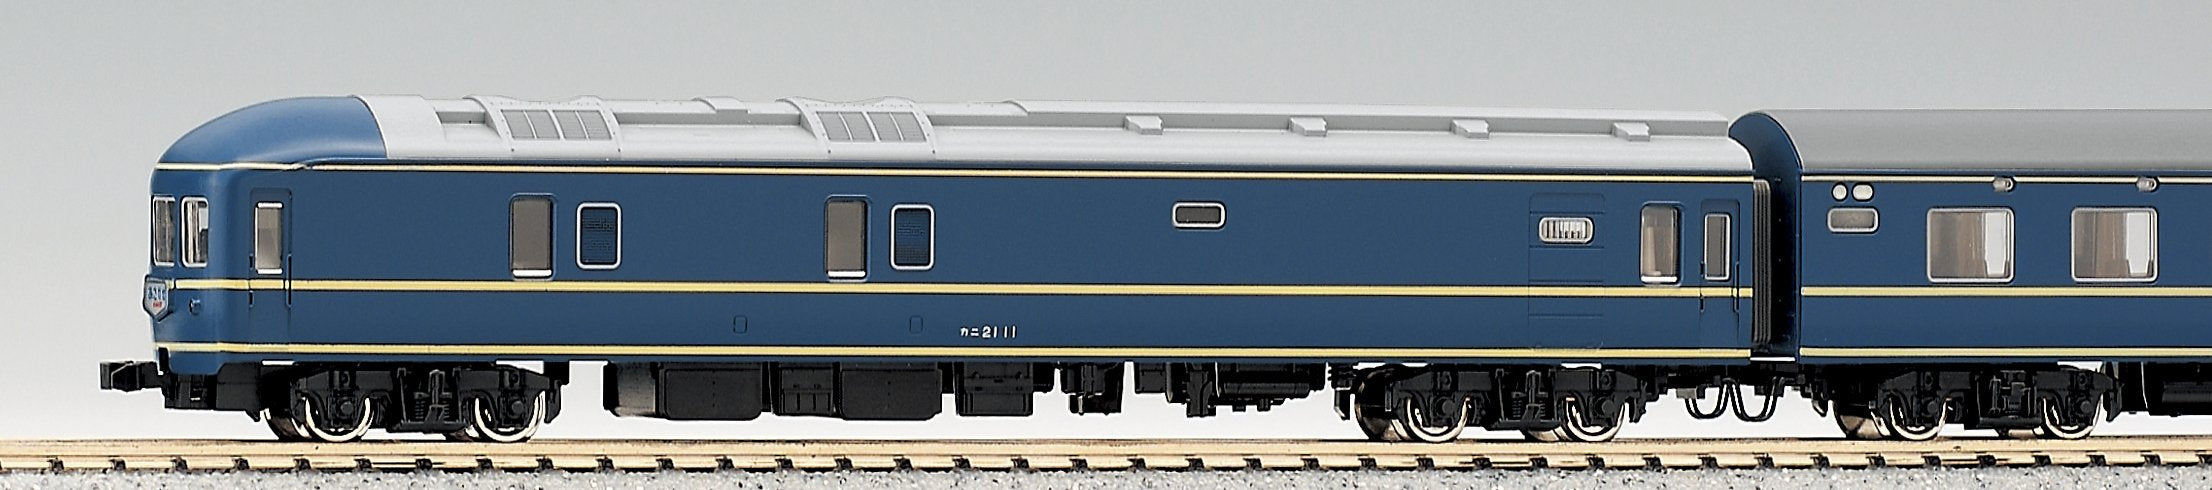 Kato N Gauge 20 Series Passenger Model Railway 7-Car Set 10-366